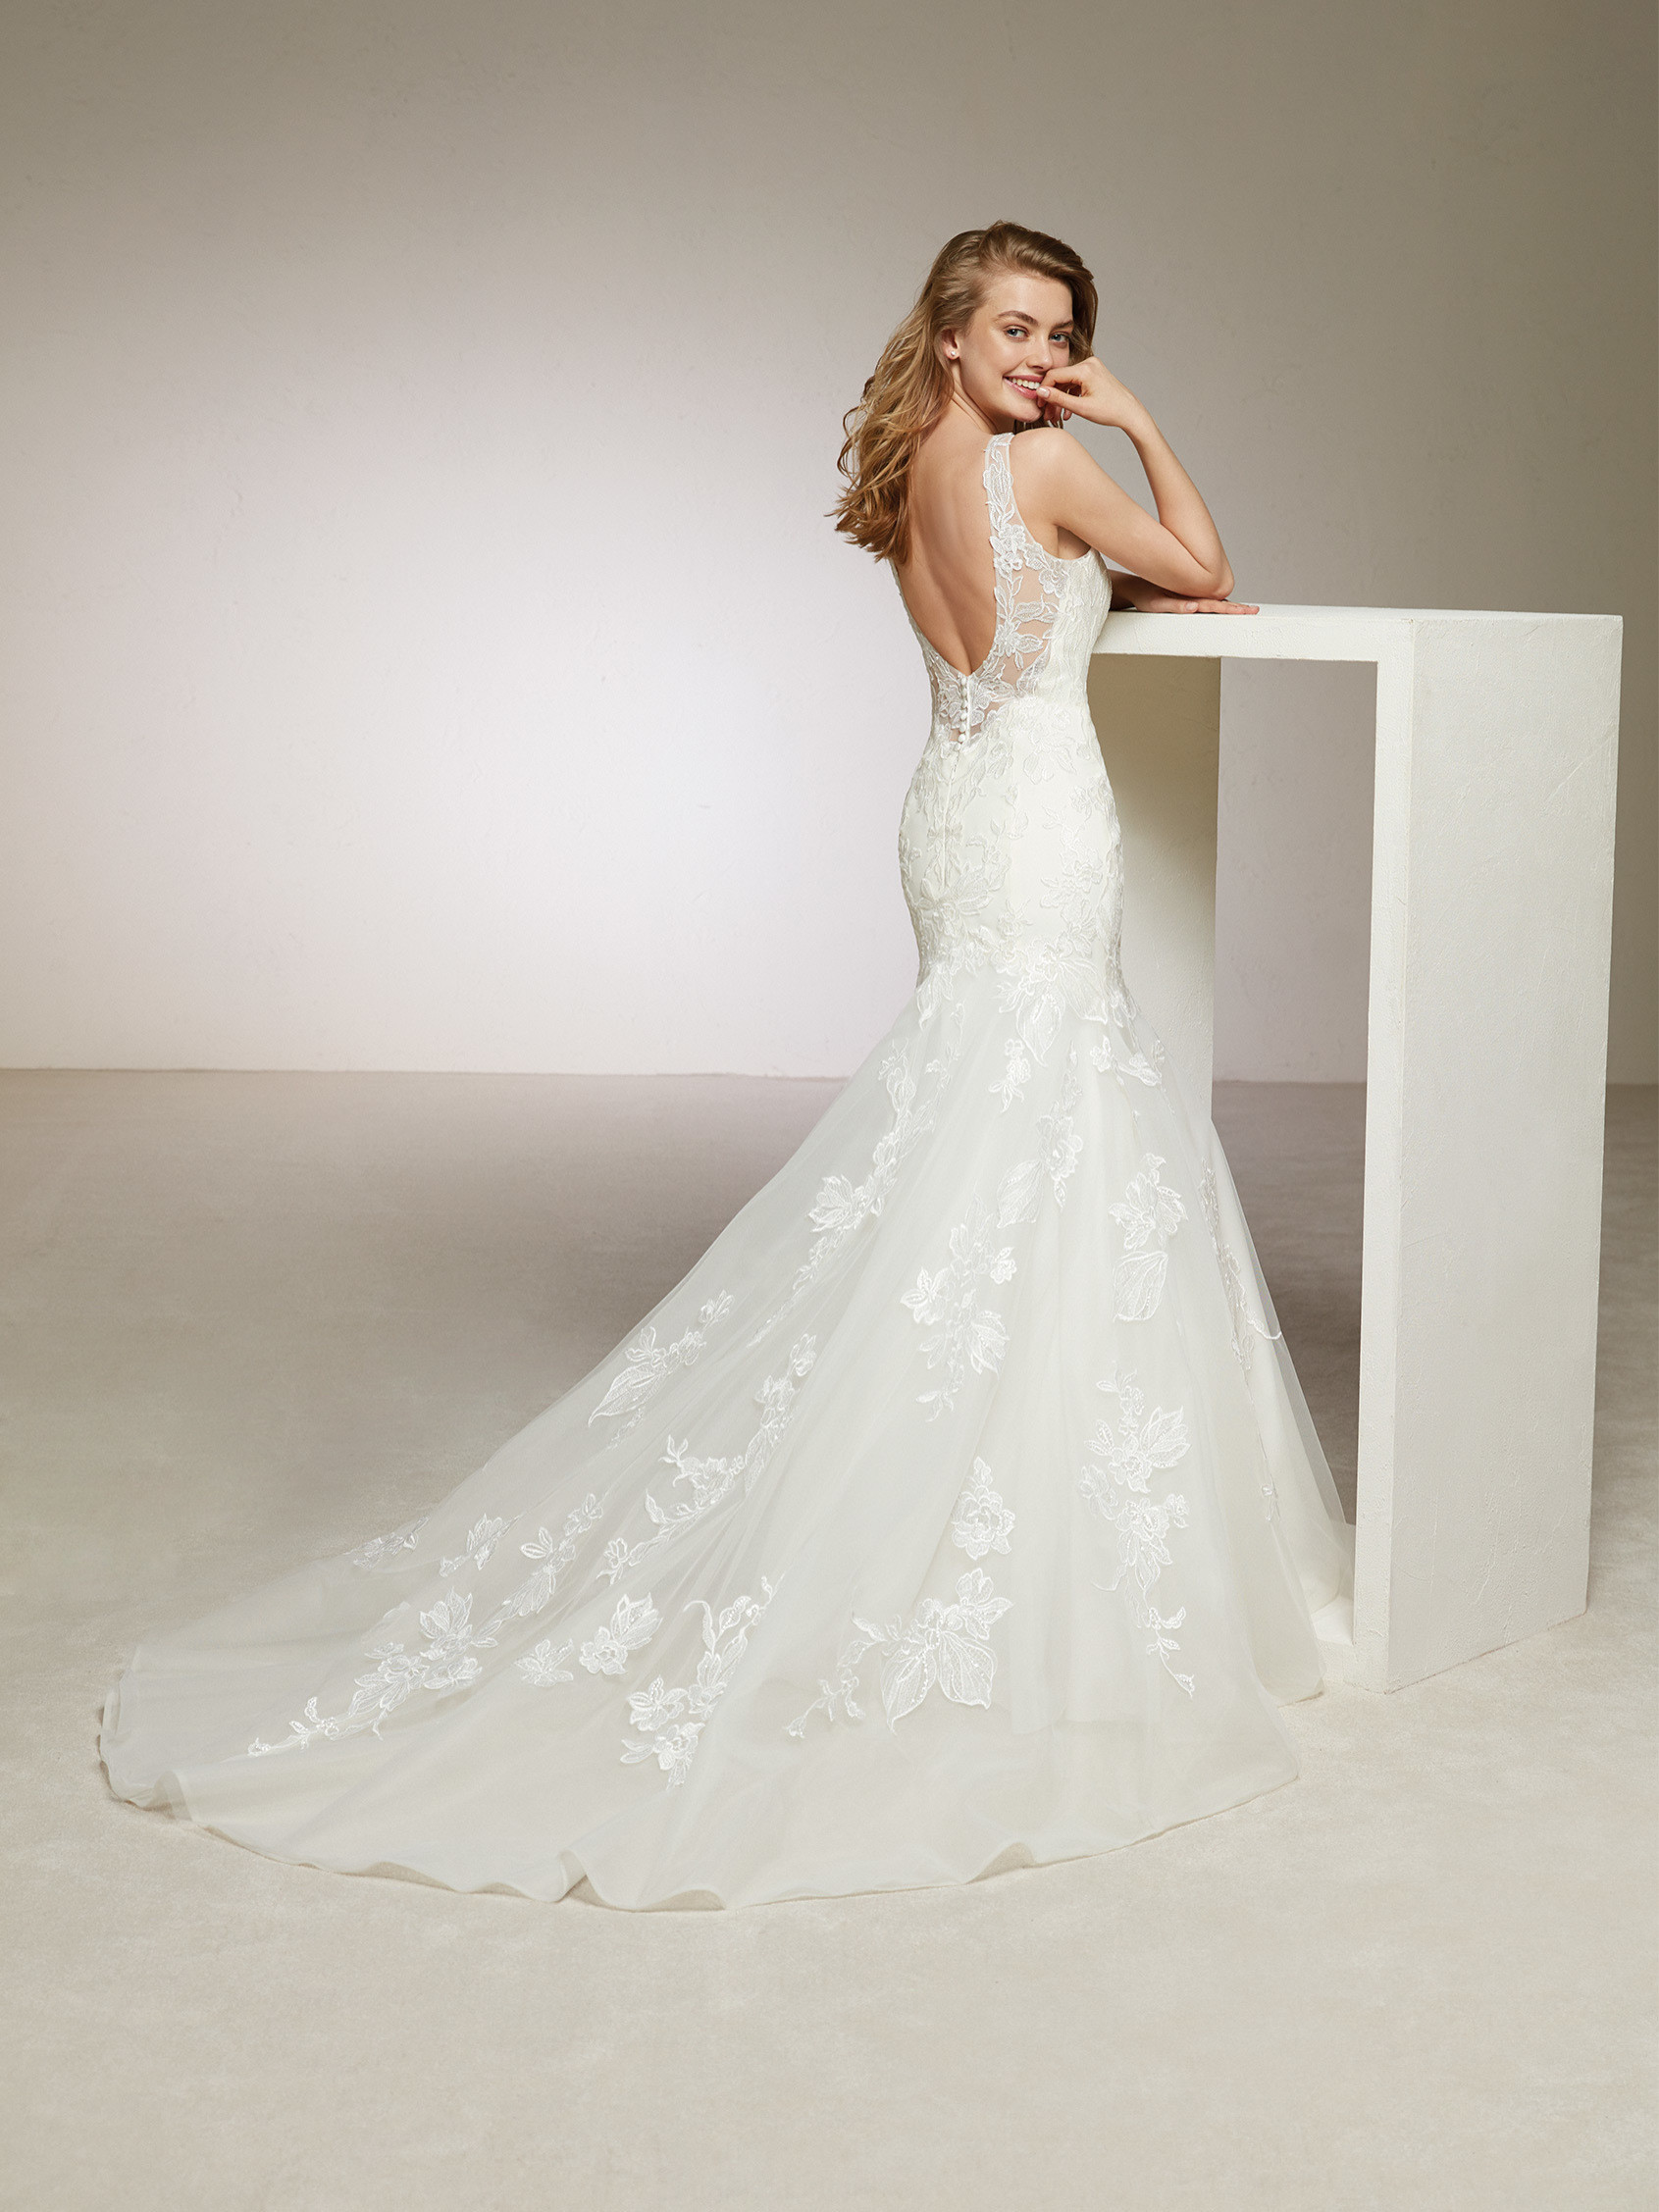 Wedding Dresses For Sale Online
 WEDDING DRESS SALE PRONOVIAS DIVIS UK8 £900